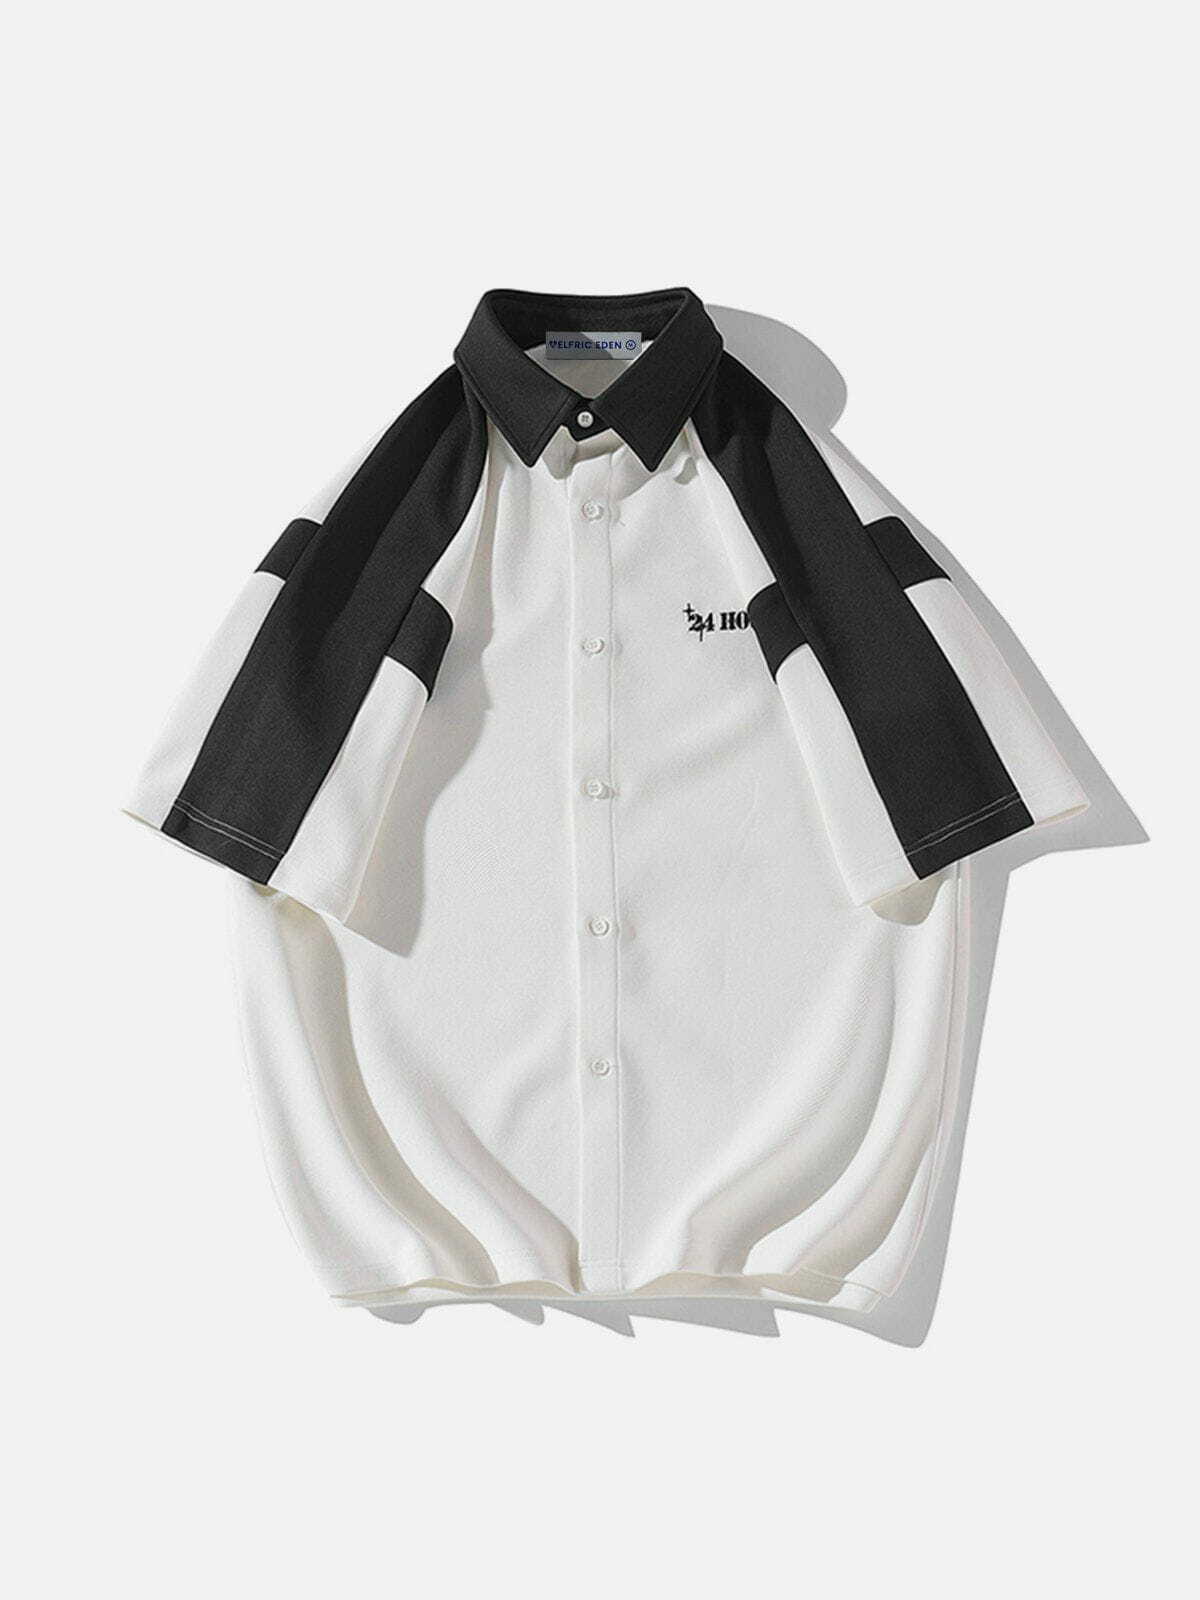 chic minimalist color block shirt   sleek & trendy fit 3815